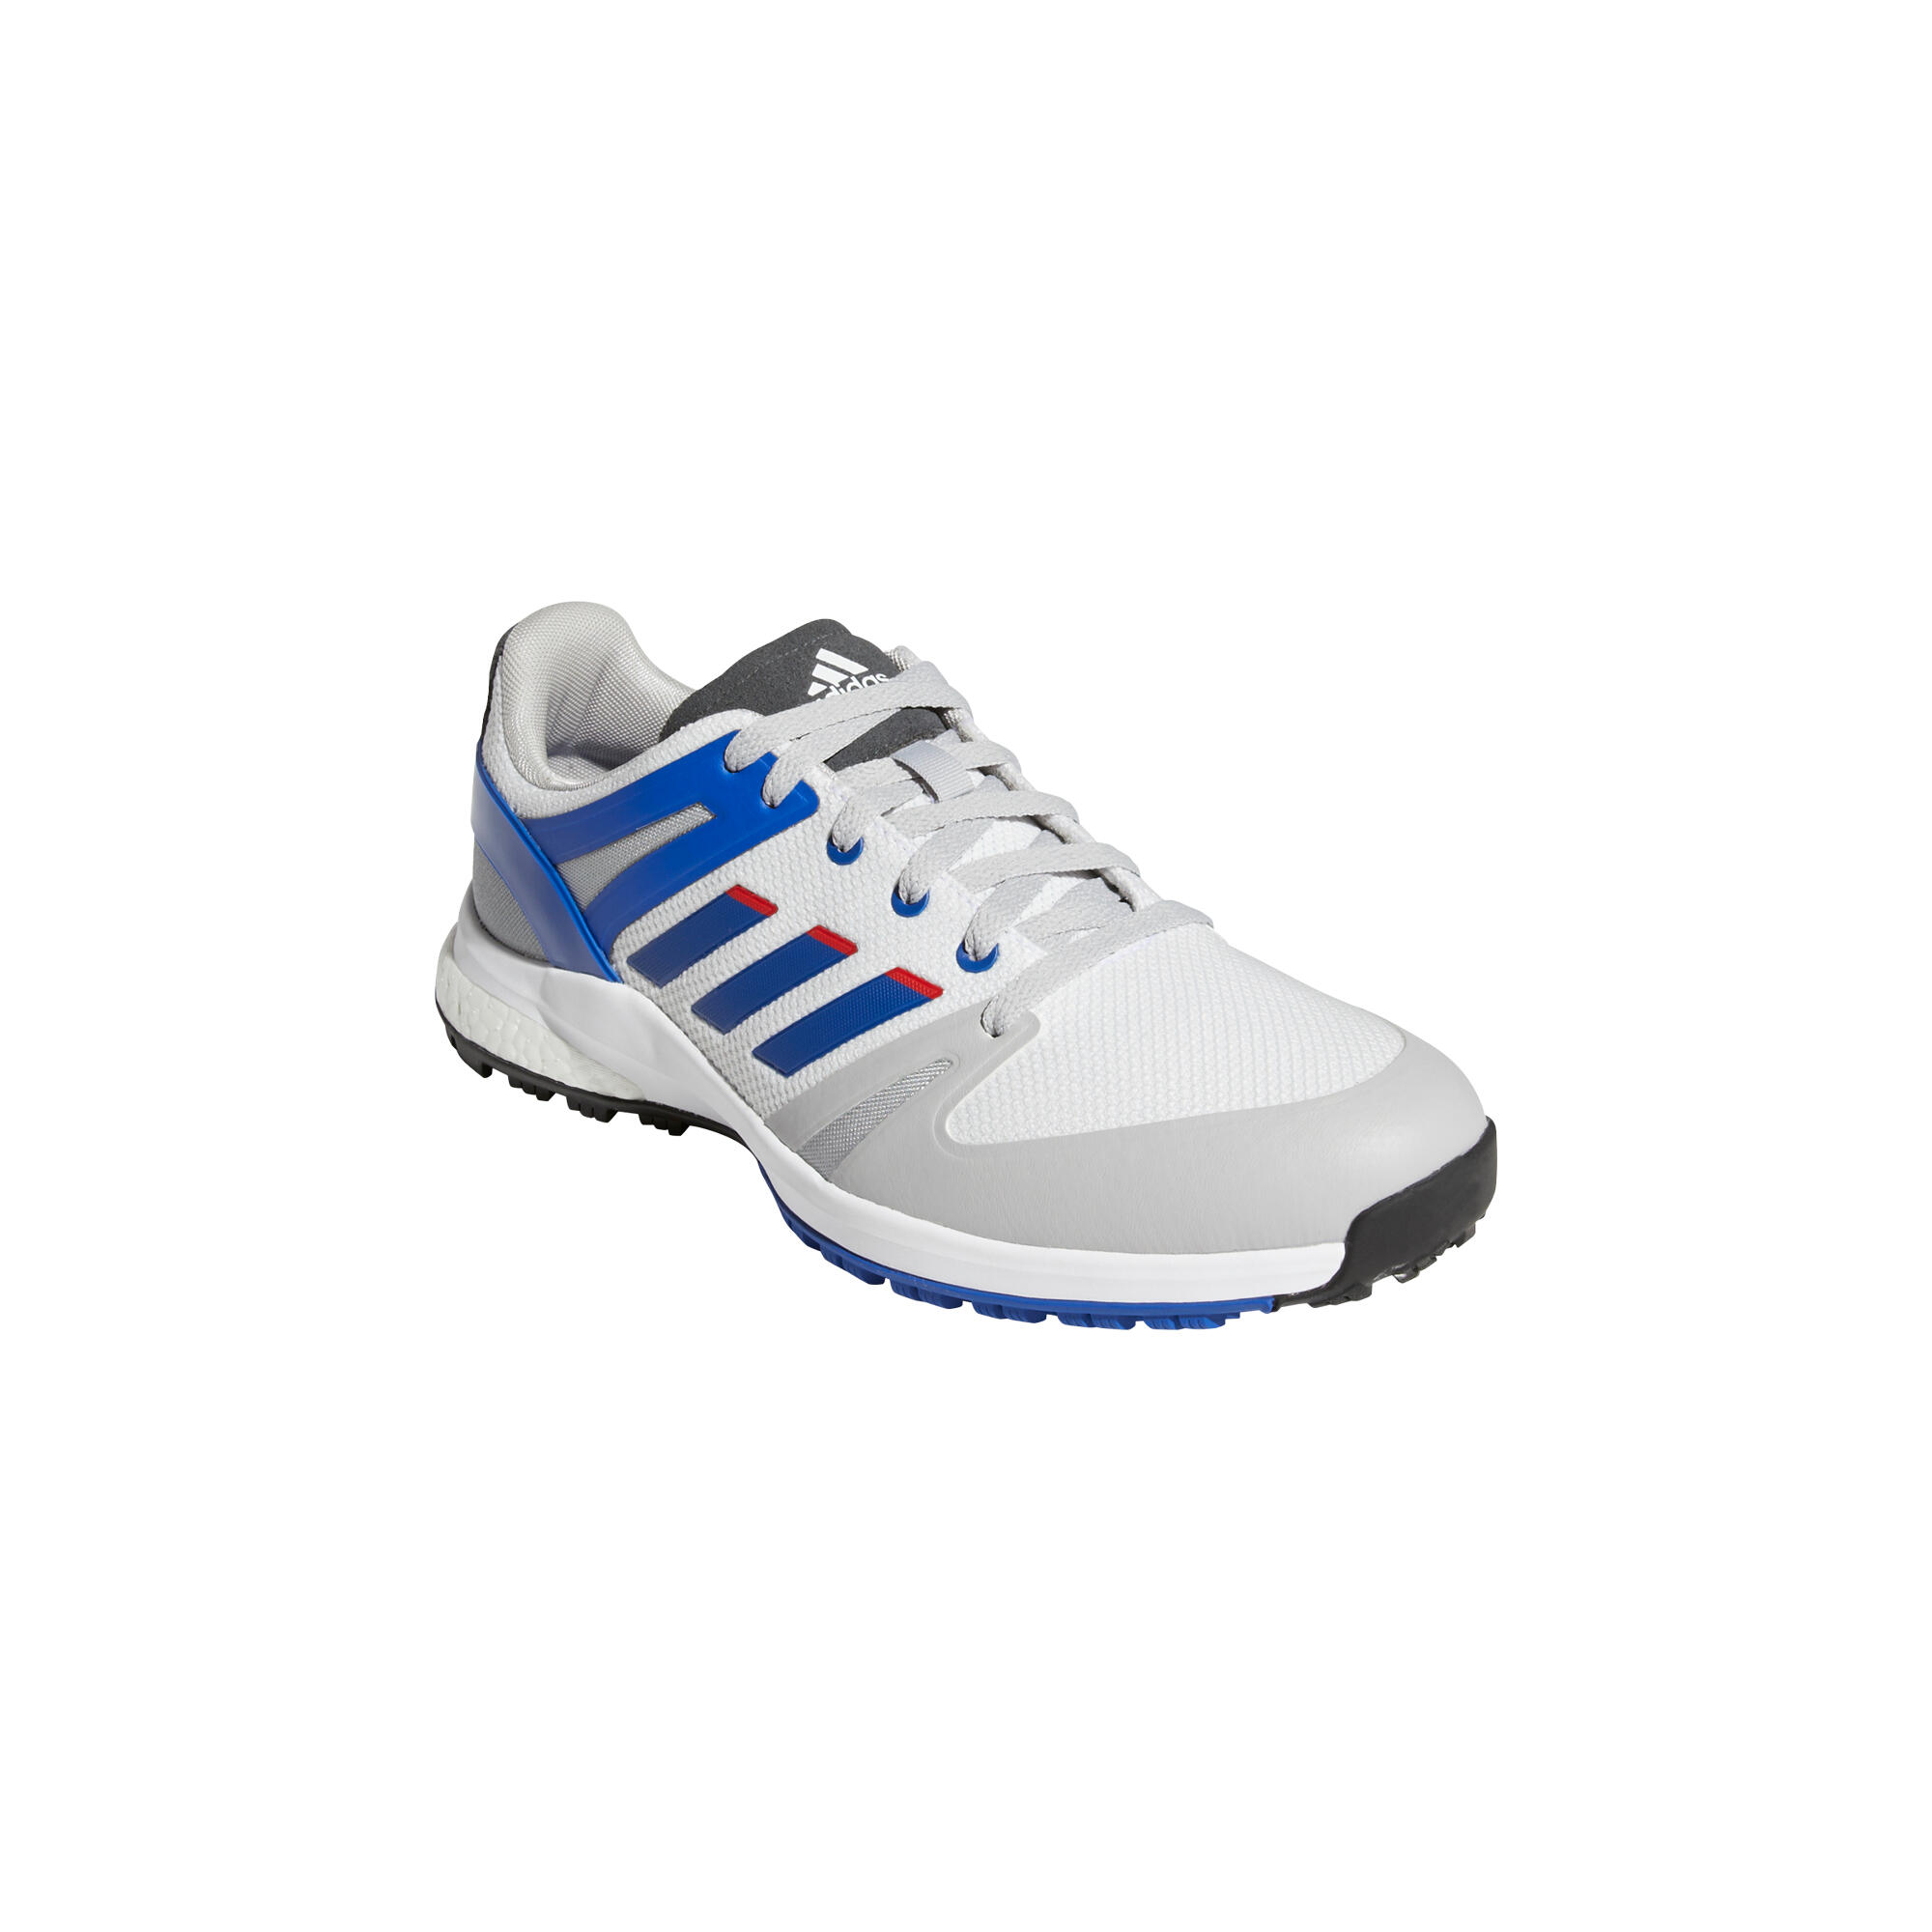 adidas EQT SL Golf Shoes - White/Blue/Grey2 4/5